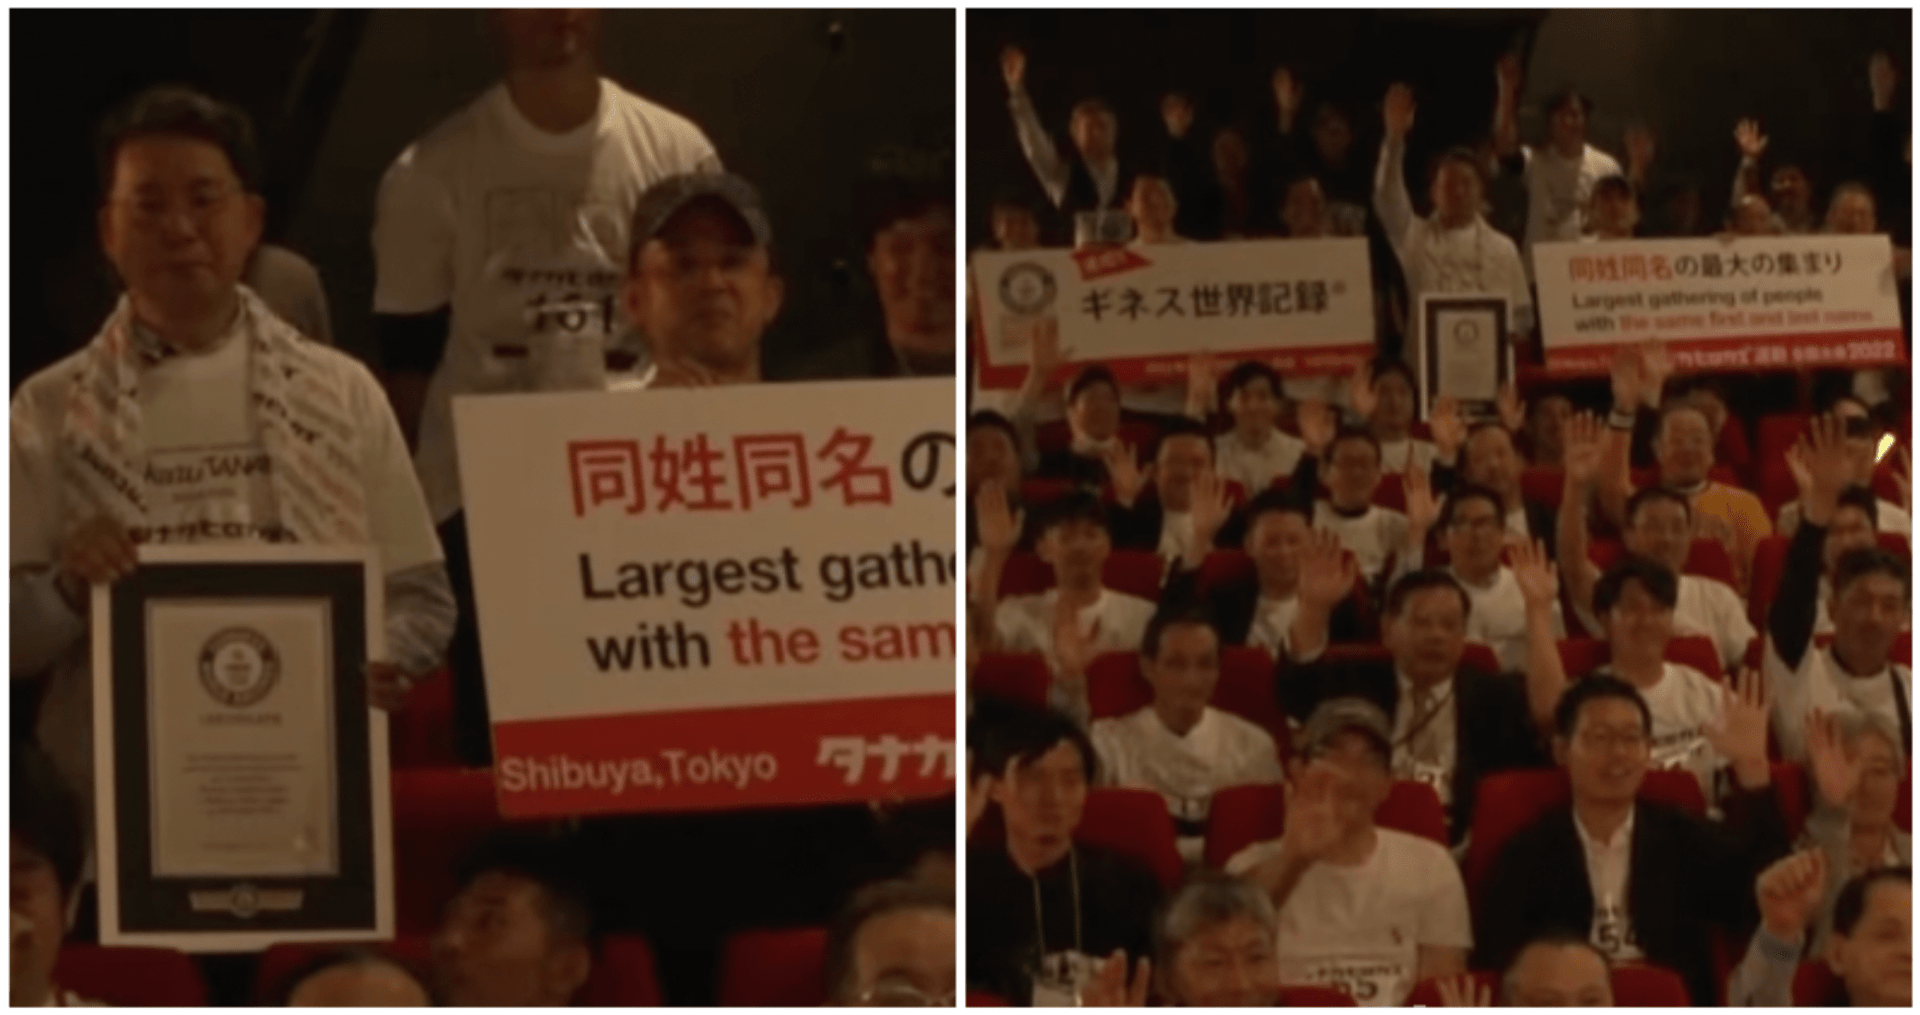 178 Hirokazu Tanakas break world record for largest group with same name